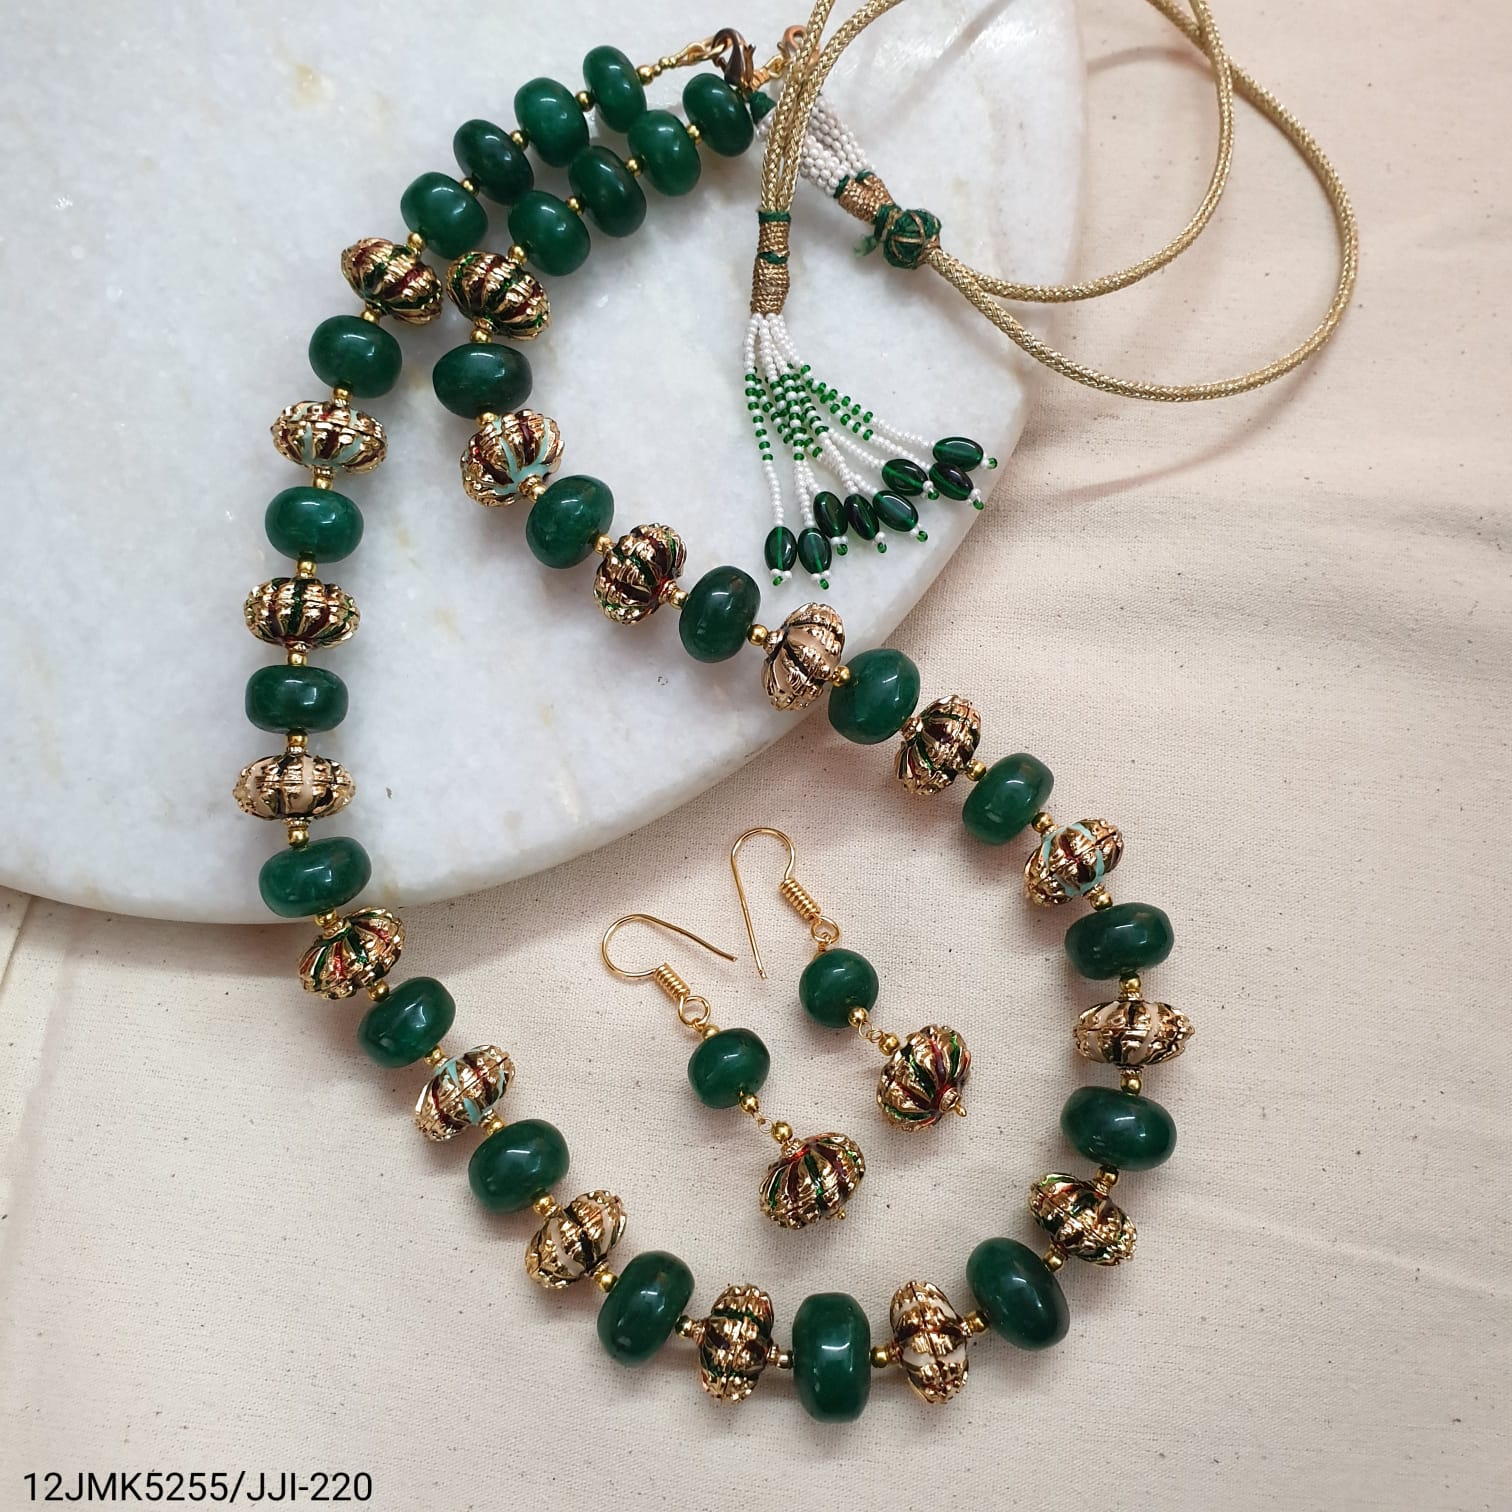 Green Onyx Meenakari Bead Necklace With Earrings